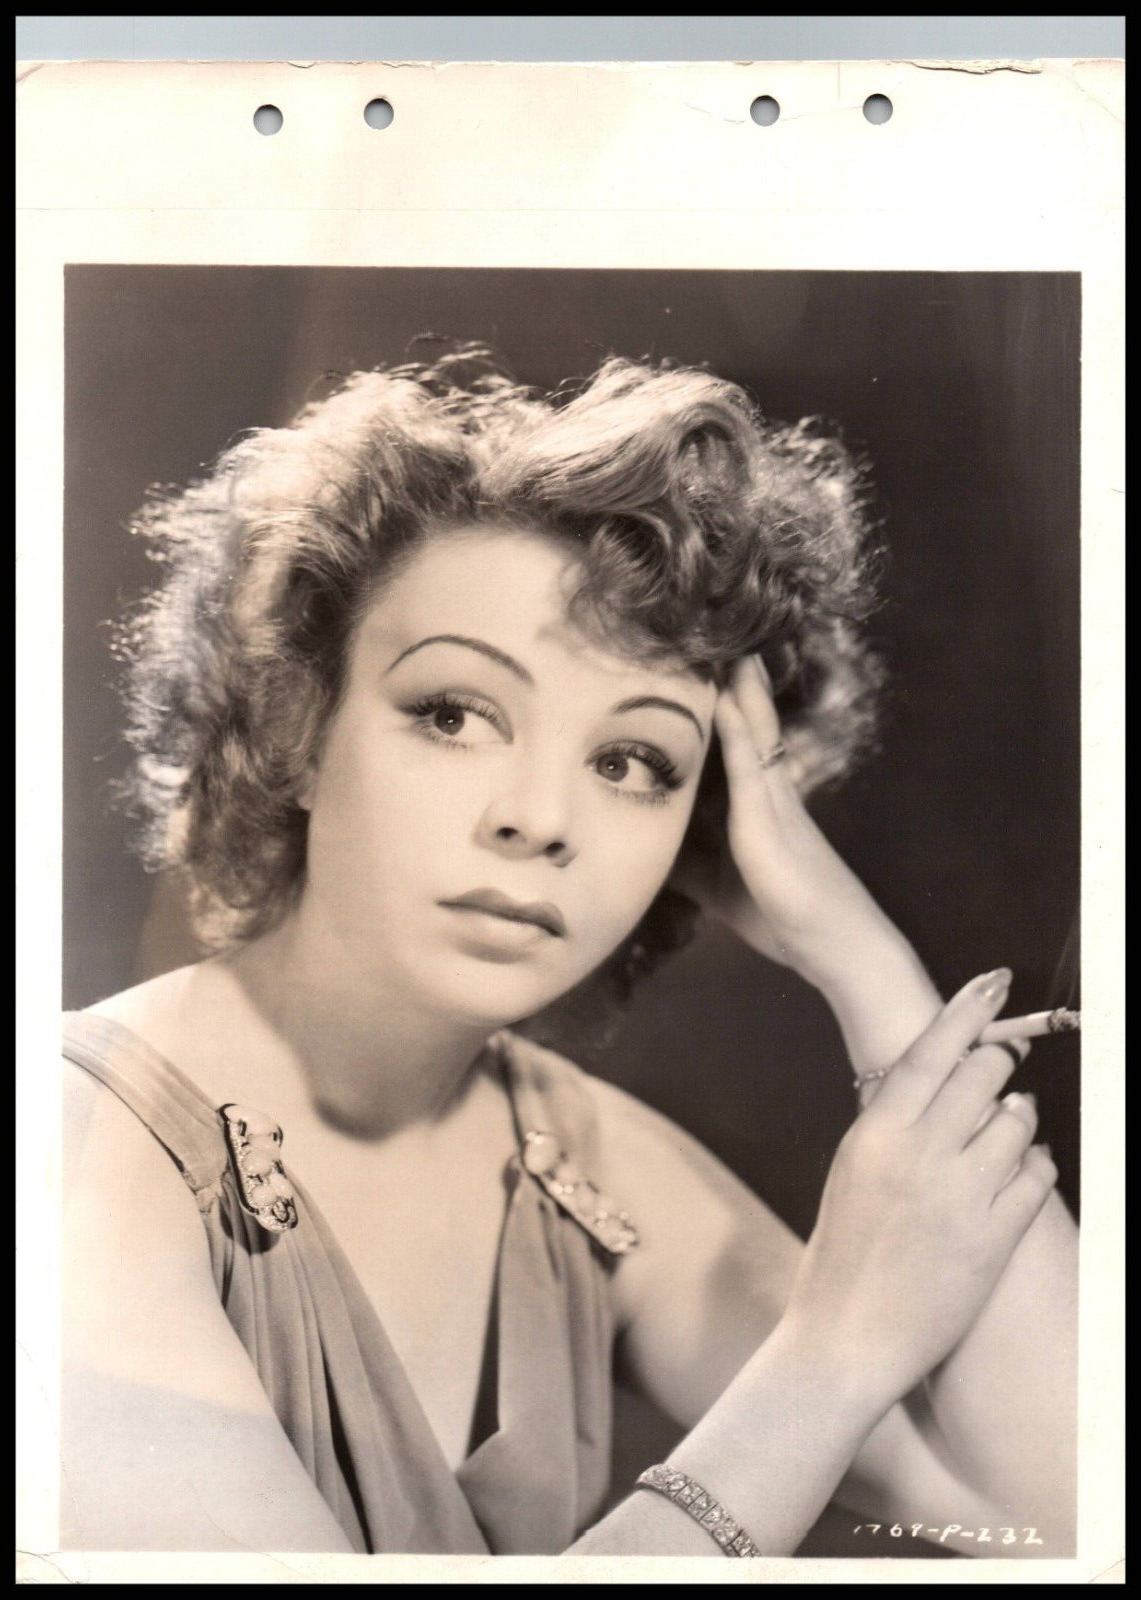 Hollywood Beauty IRIS ADRIAN STYLISH POSE STUNNING PORTRAIT 1940s Photo 715